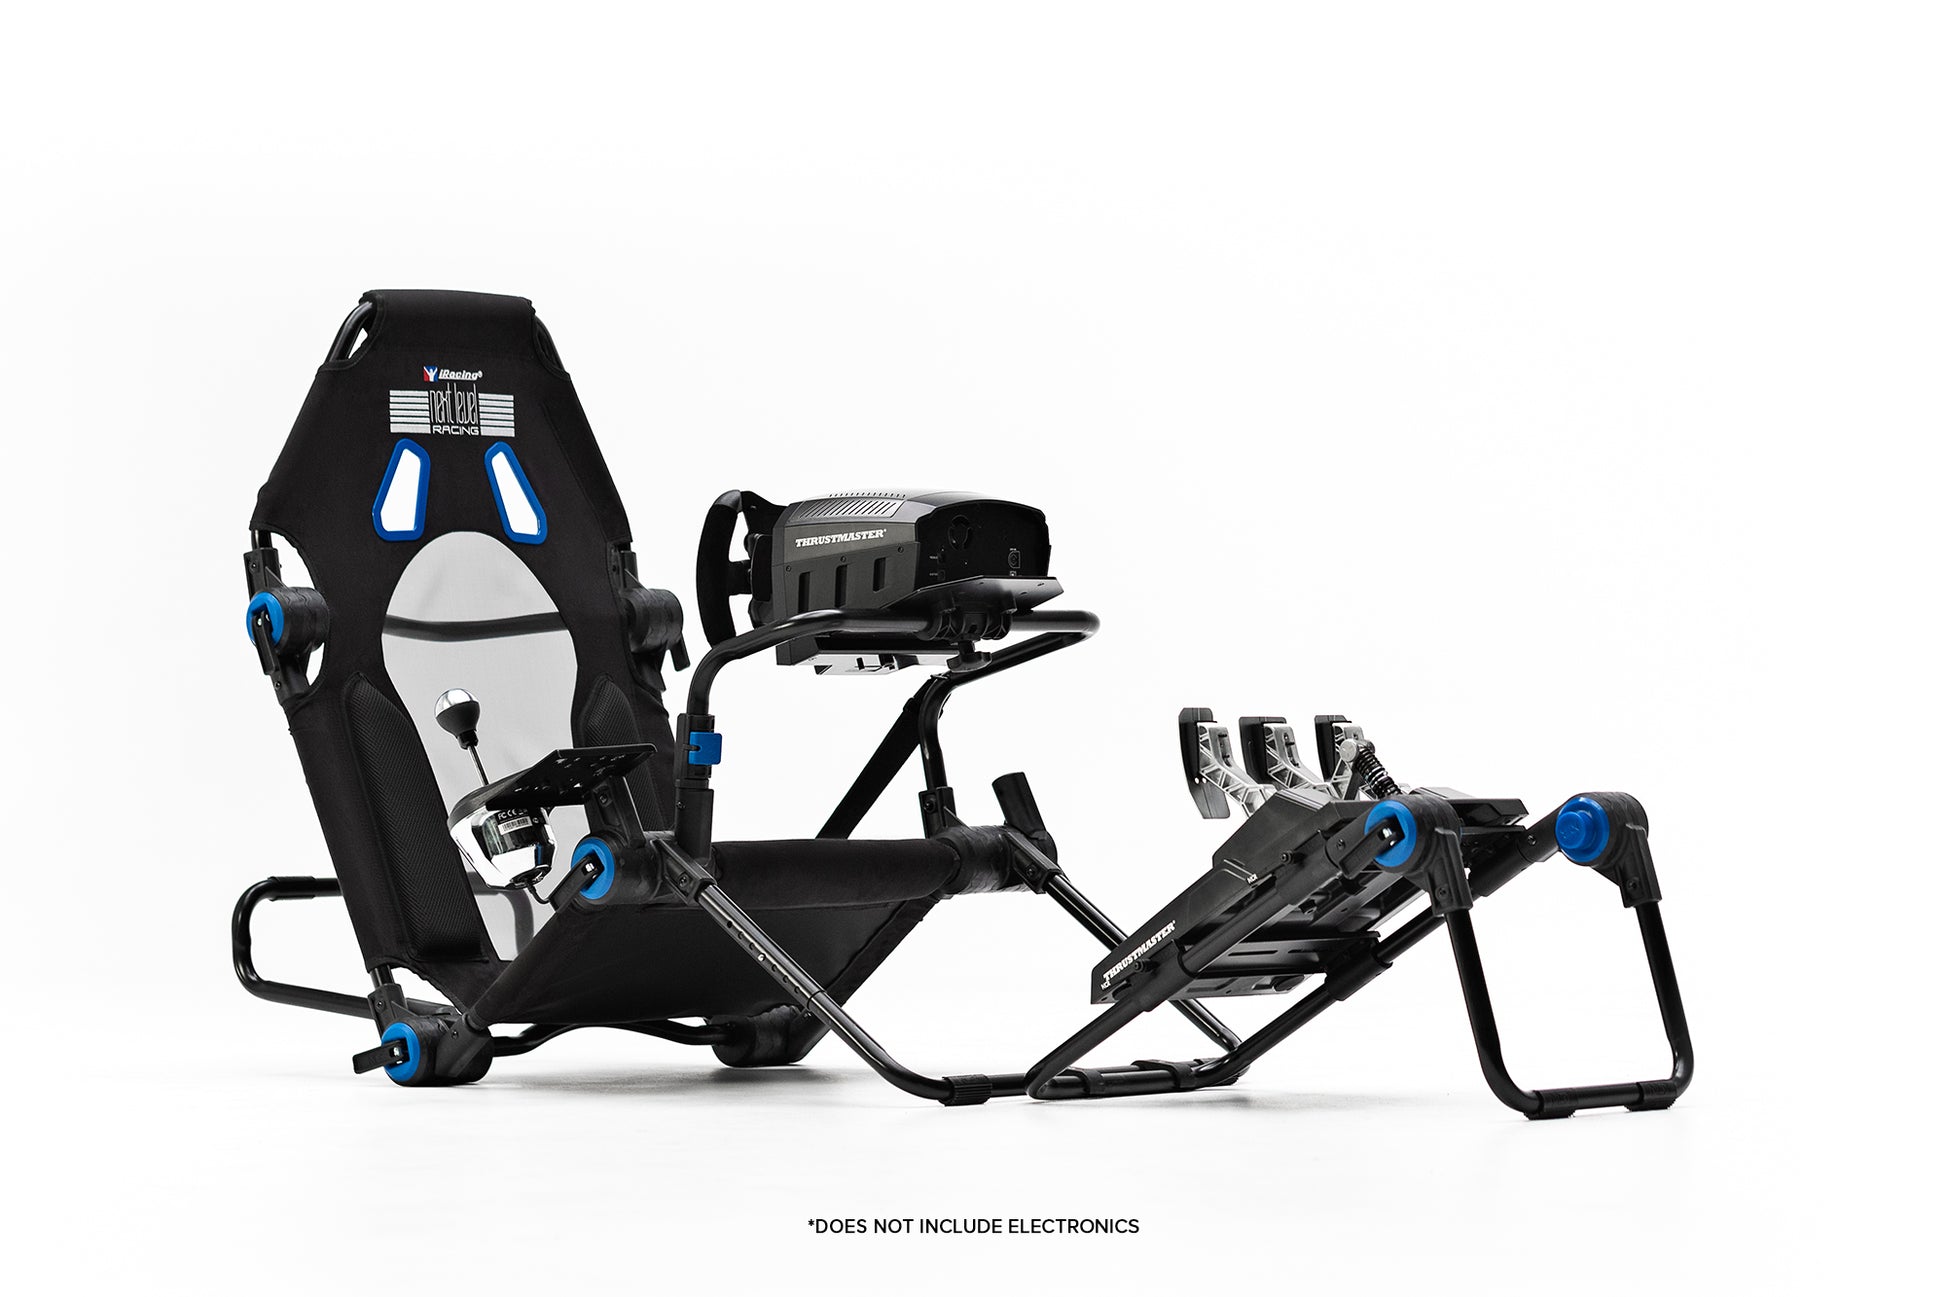 Next Level Racing introduces Elite Lite sim racing cockpit and seat range